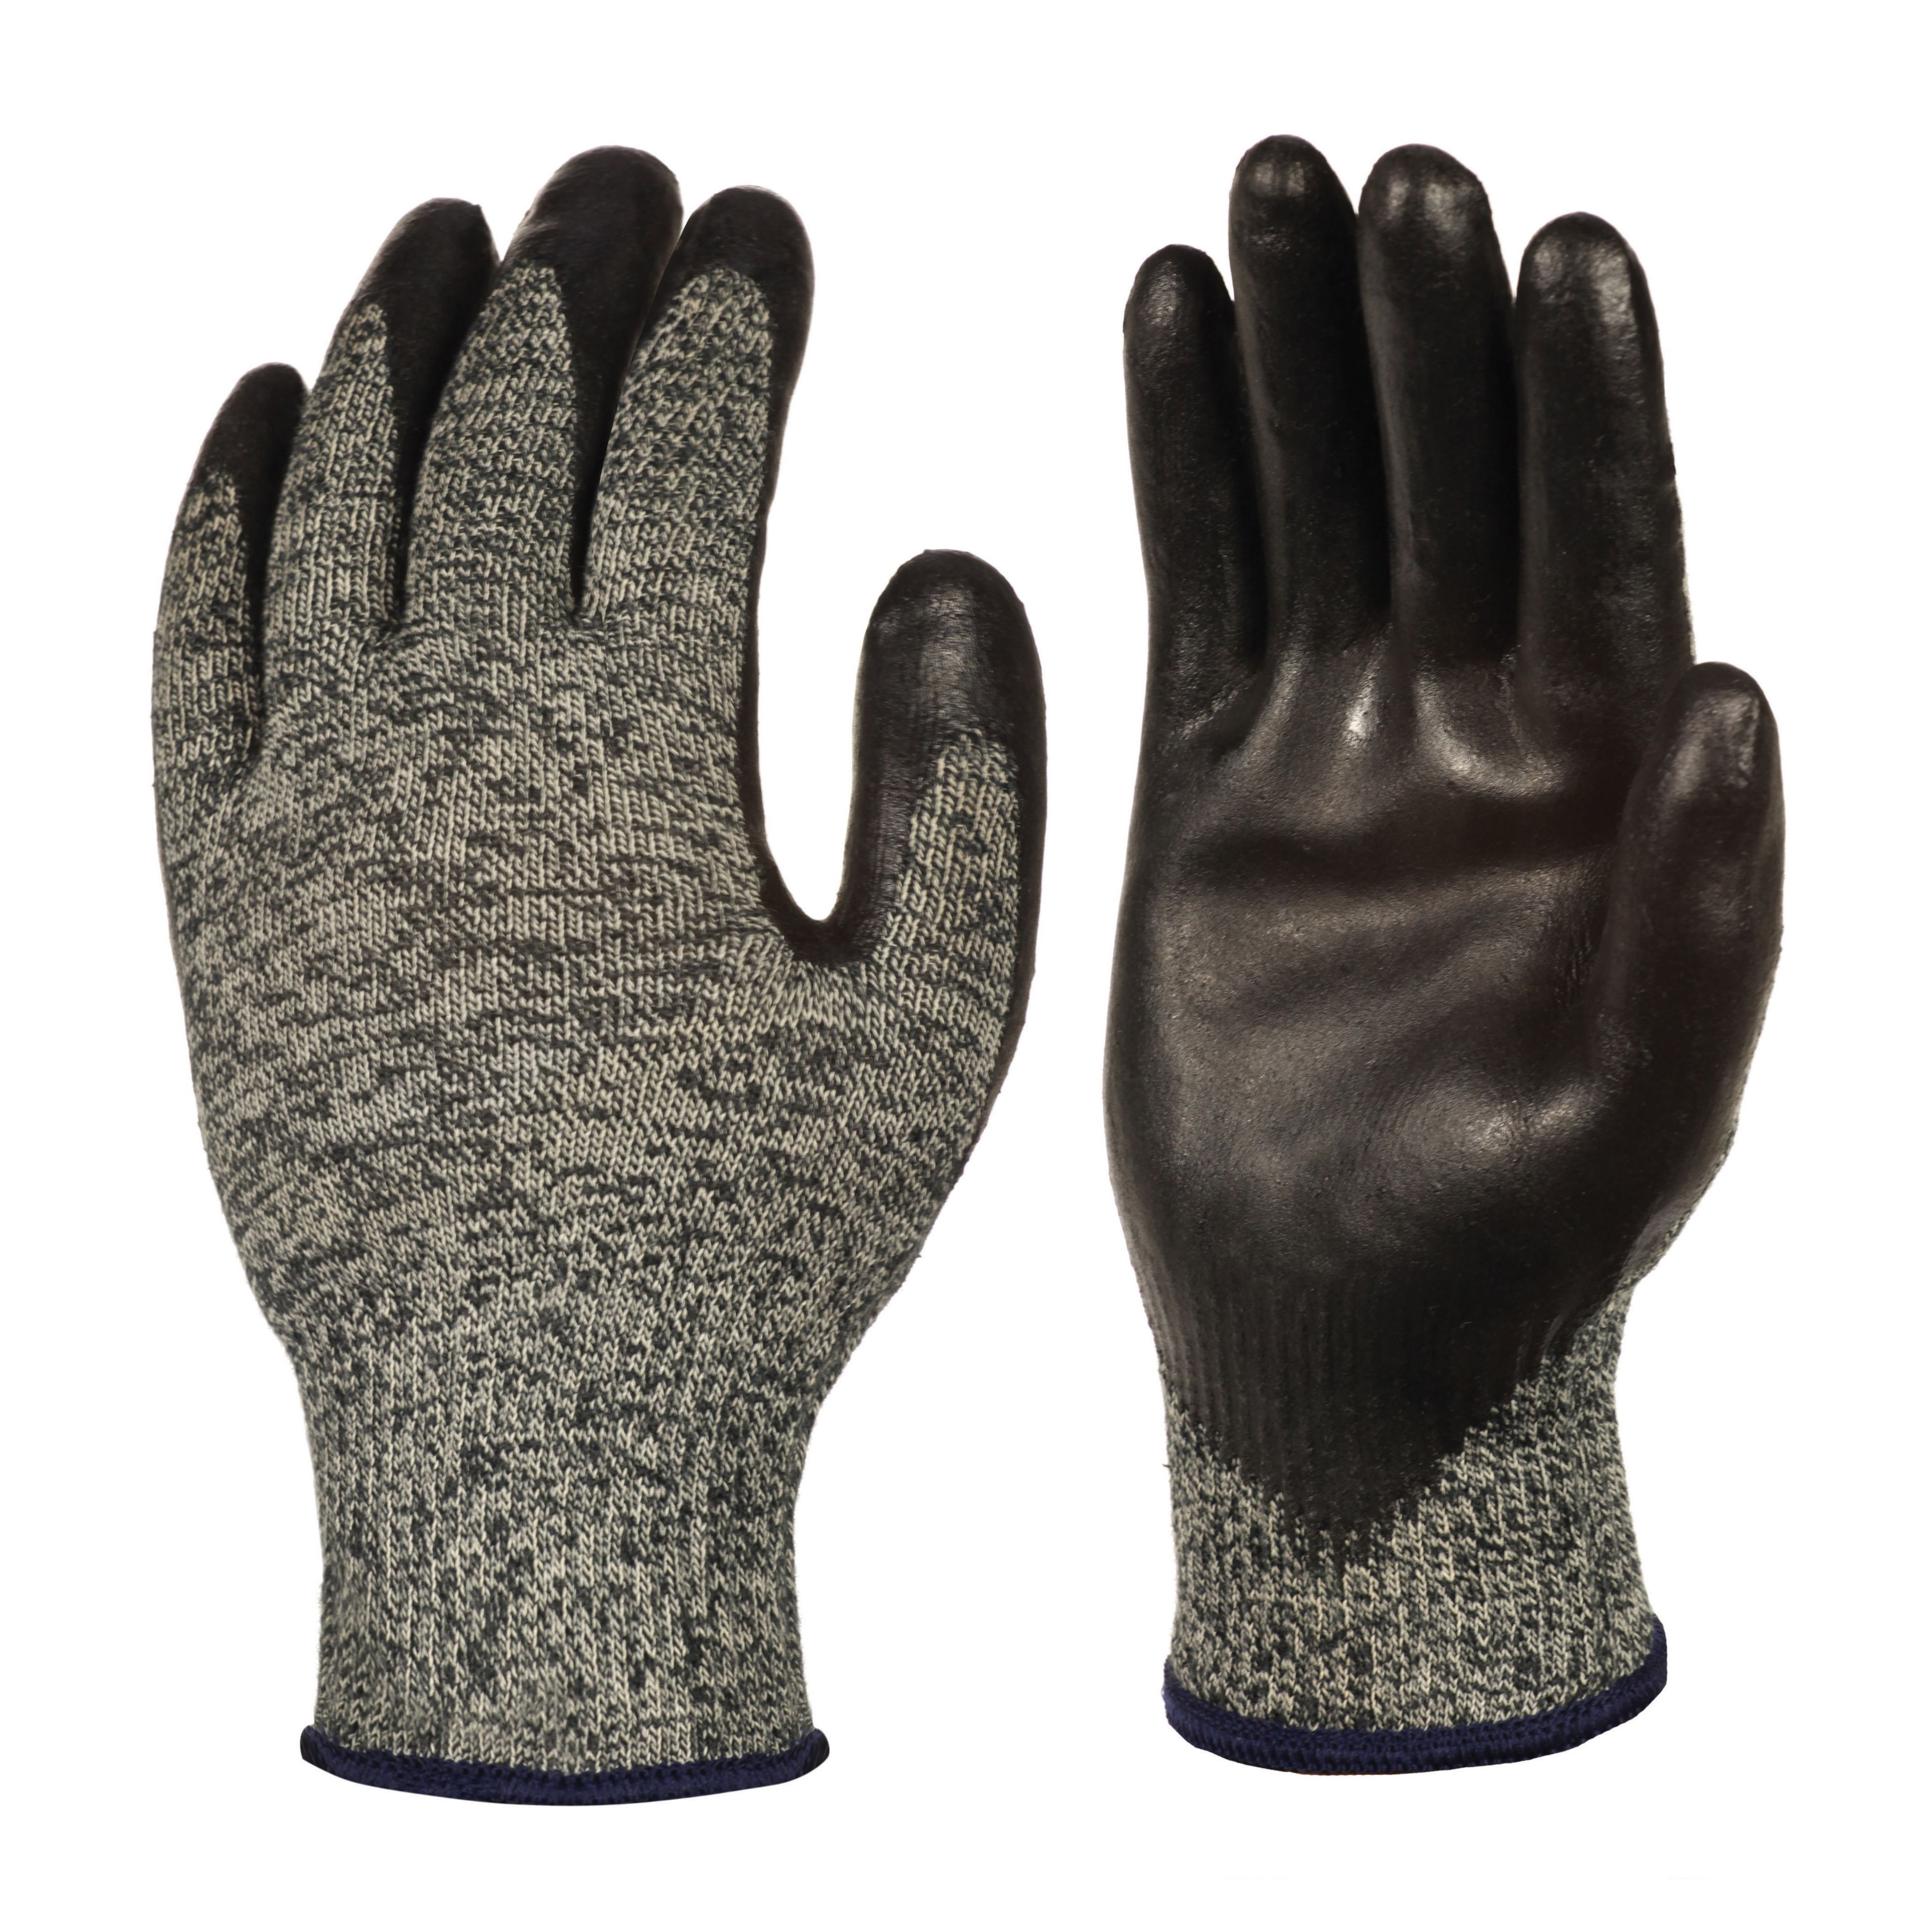 Showa Heat Protection Gloves, Medium, Pair | Departments | DIY at B&Q